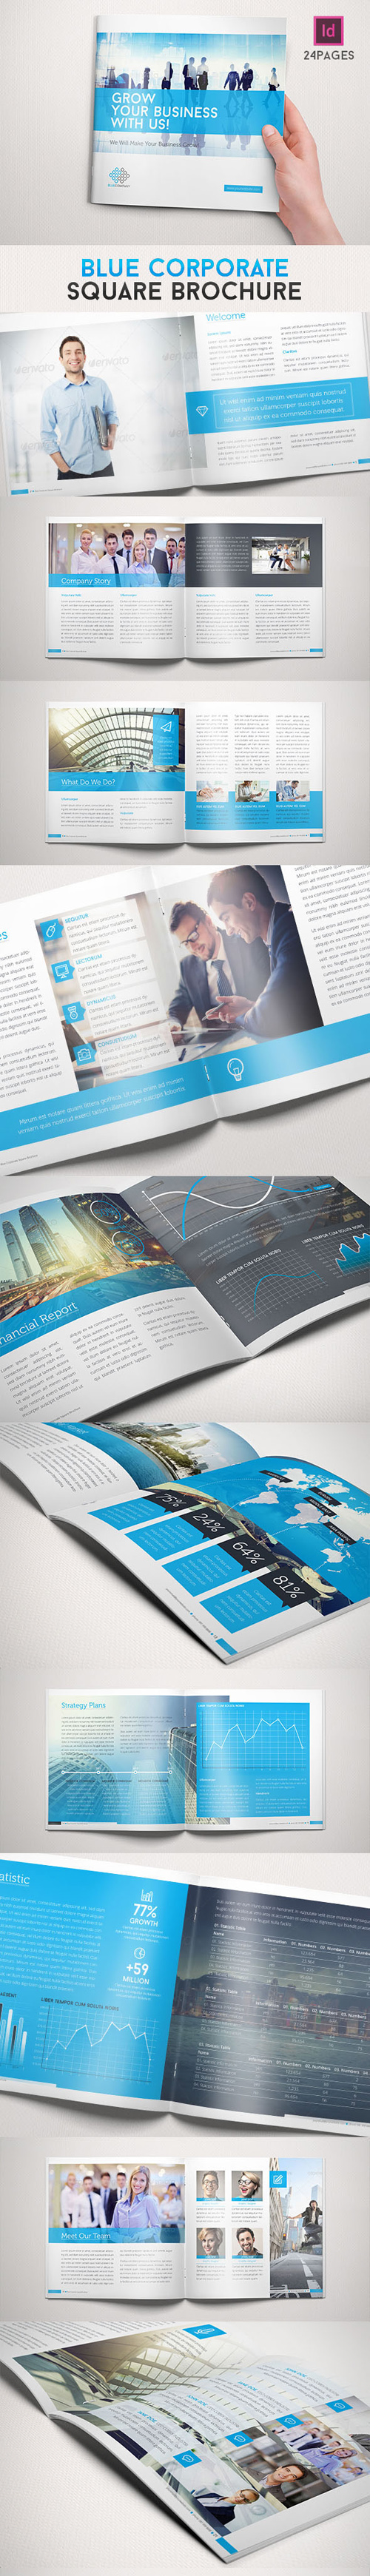 Blue Corporate Square Brochure